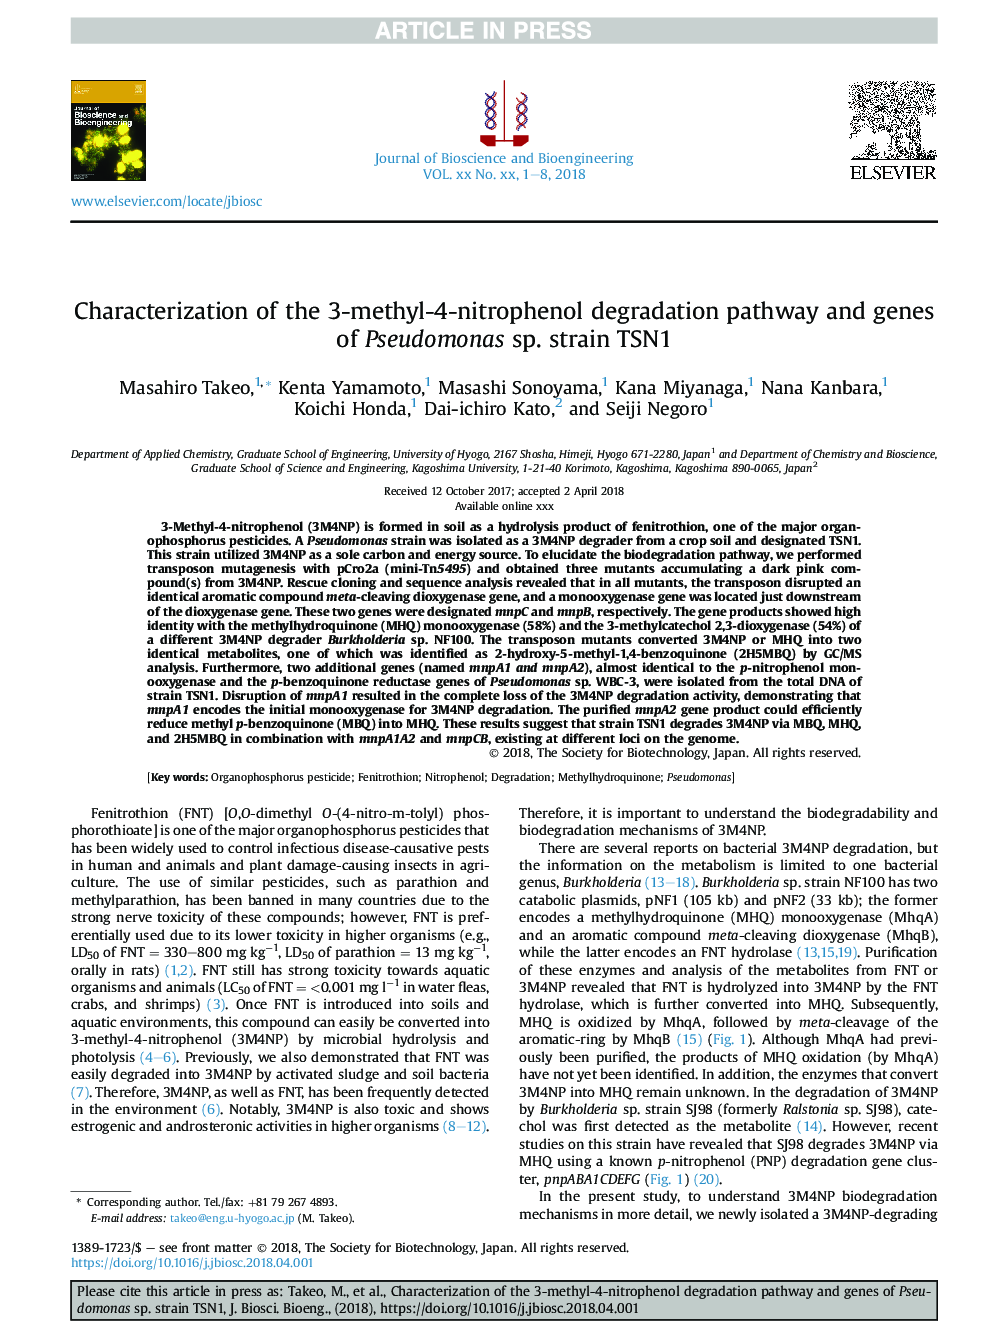 Characterization of the 3-methyl-4-nitrophenol degradation pathway and genes of Pseudomonas sp. strain TSN1